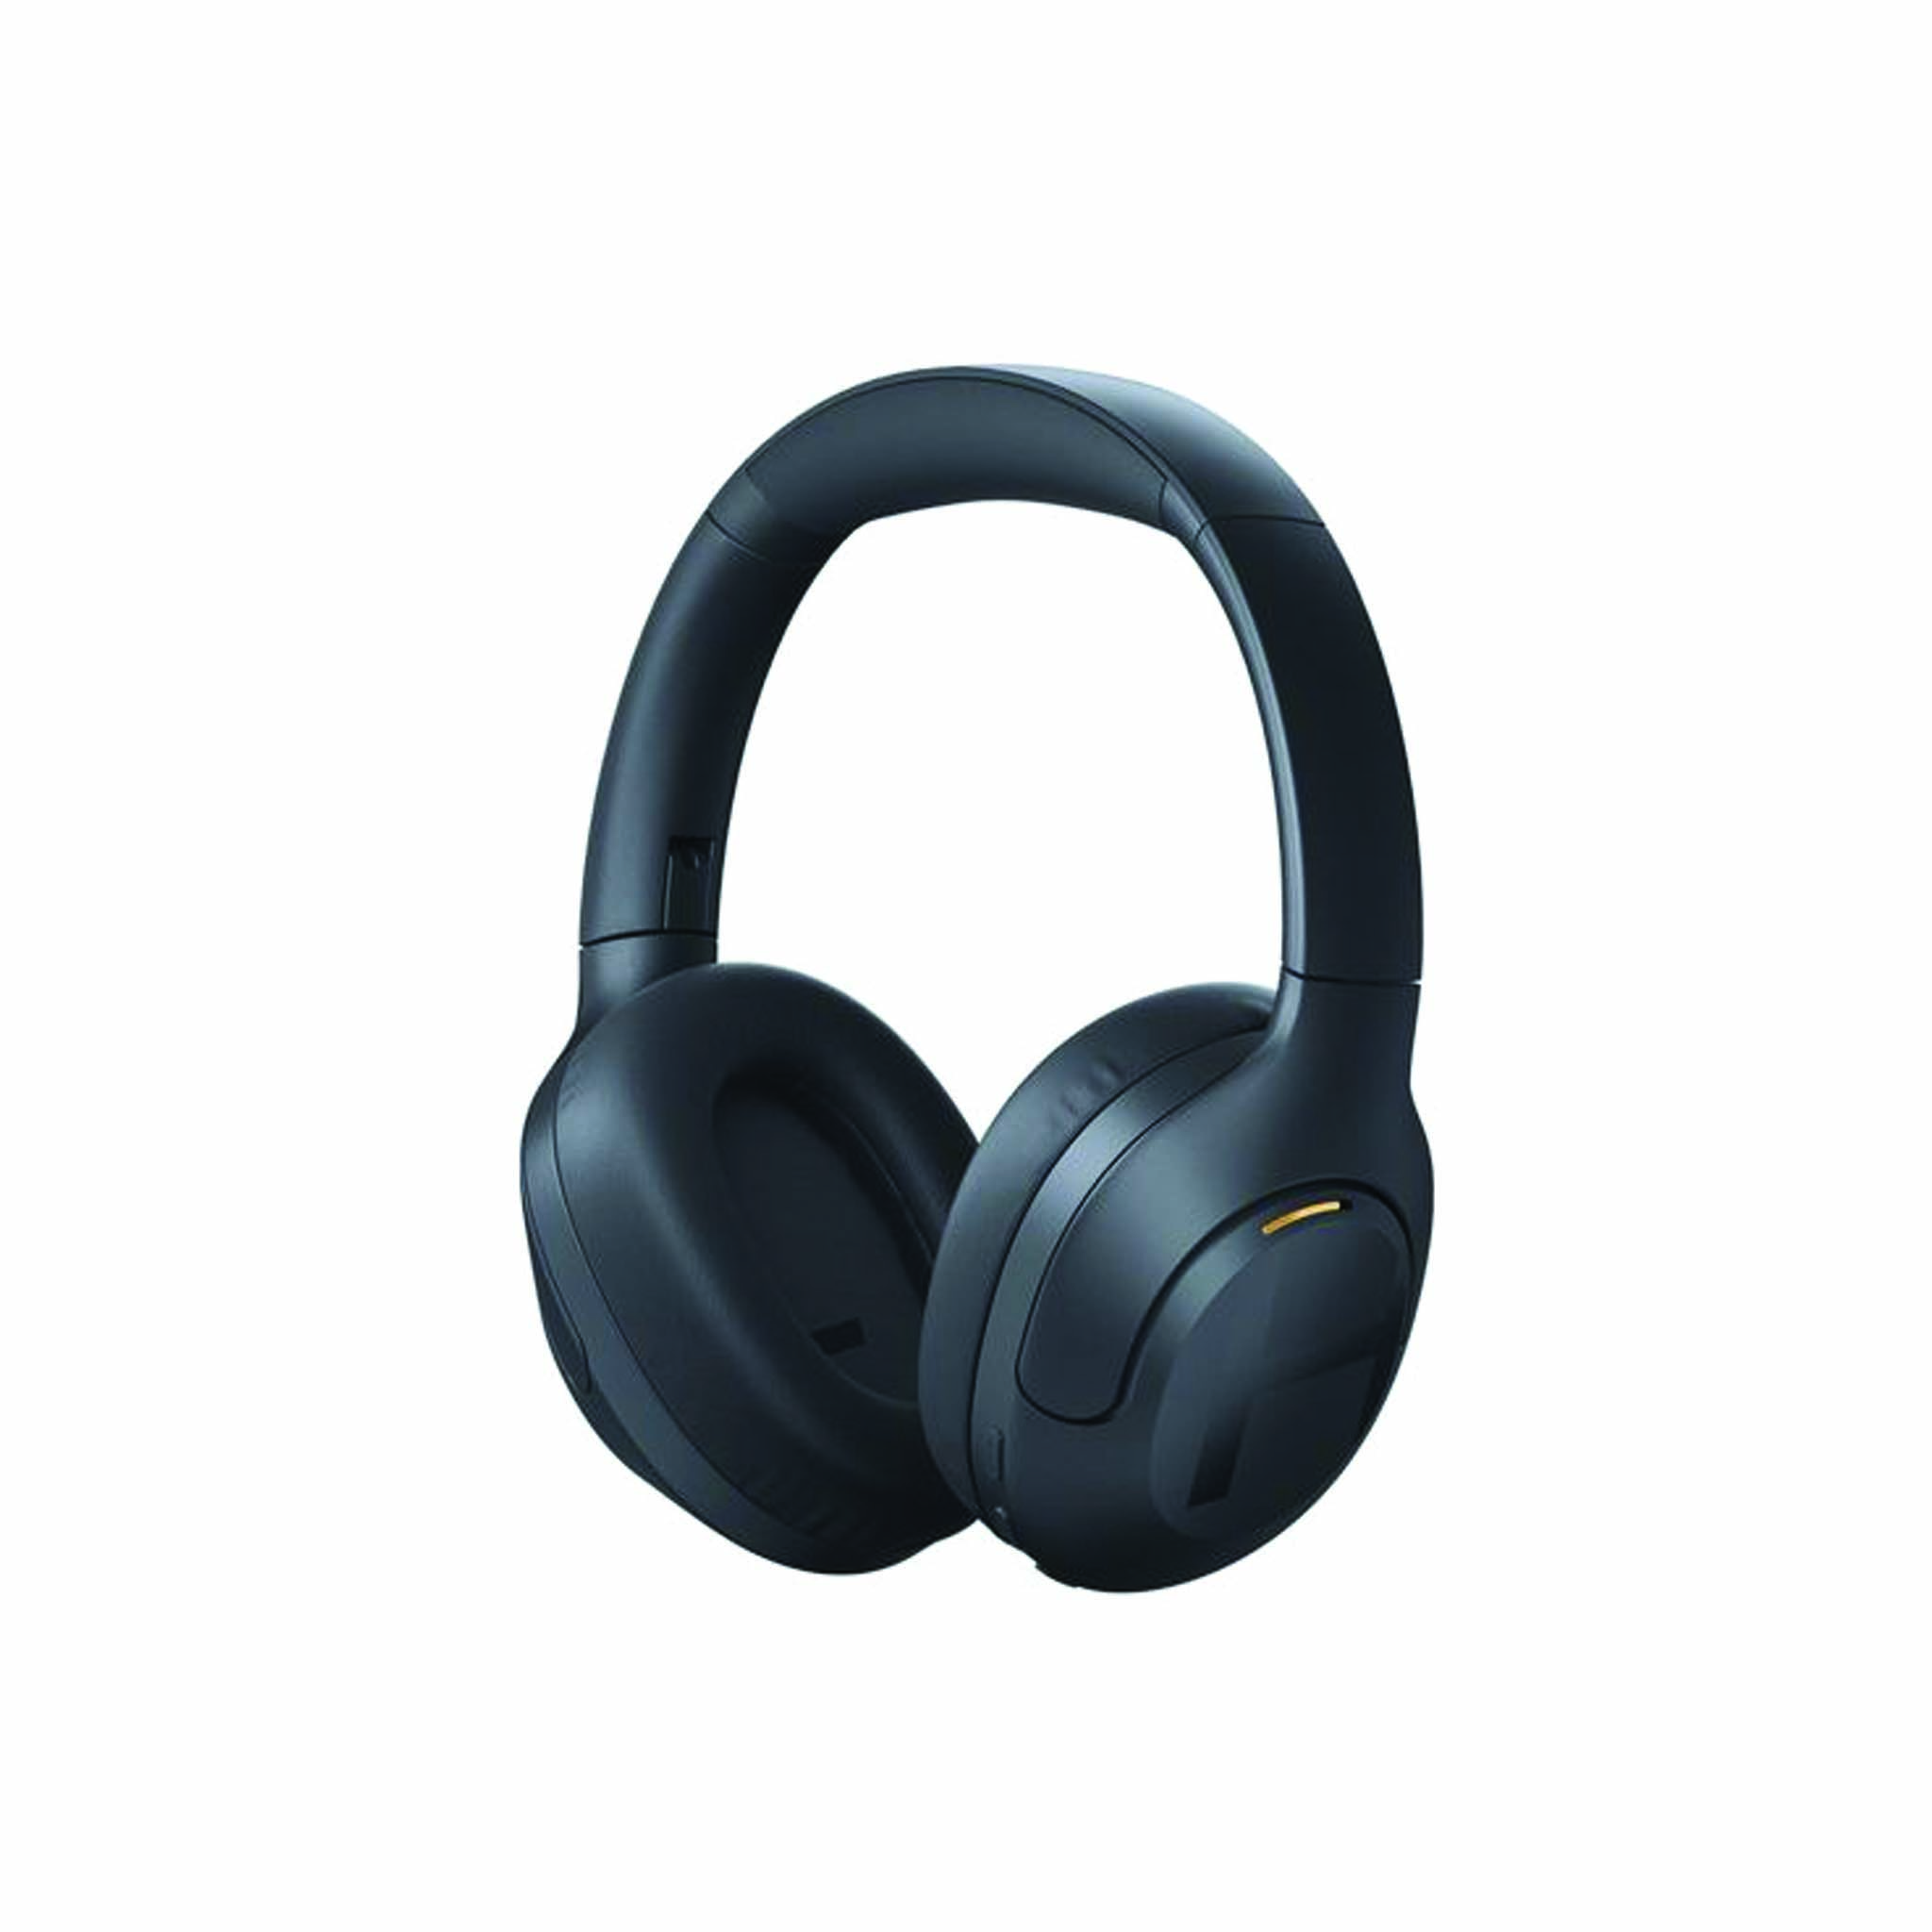 Haylou S35 ANC Hi-Res Headphone Headset Bluetooth Wireless Active Noise  Cancel - Mi Gadget Malang